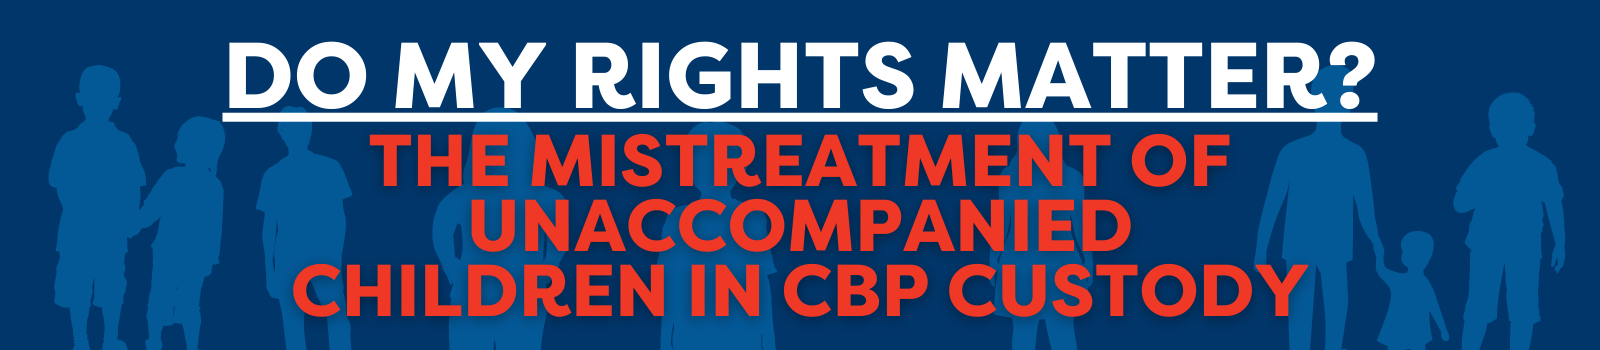 Do My Rights Matter: The Mistreatment of Unaccompanied Children in CBP Custody